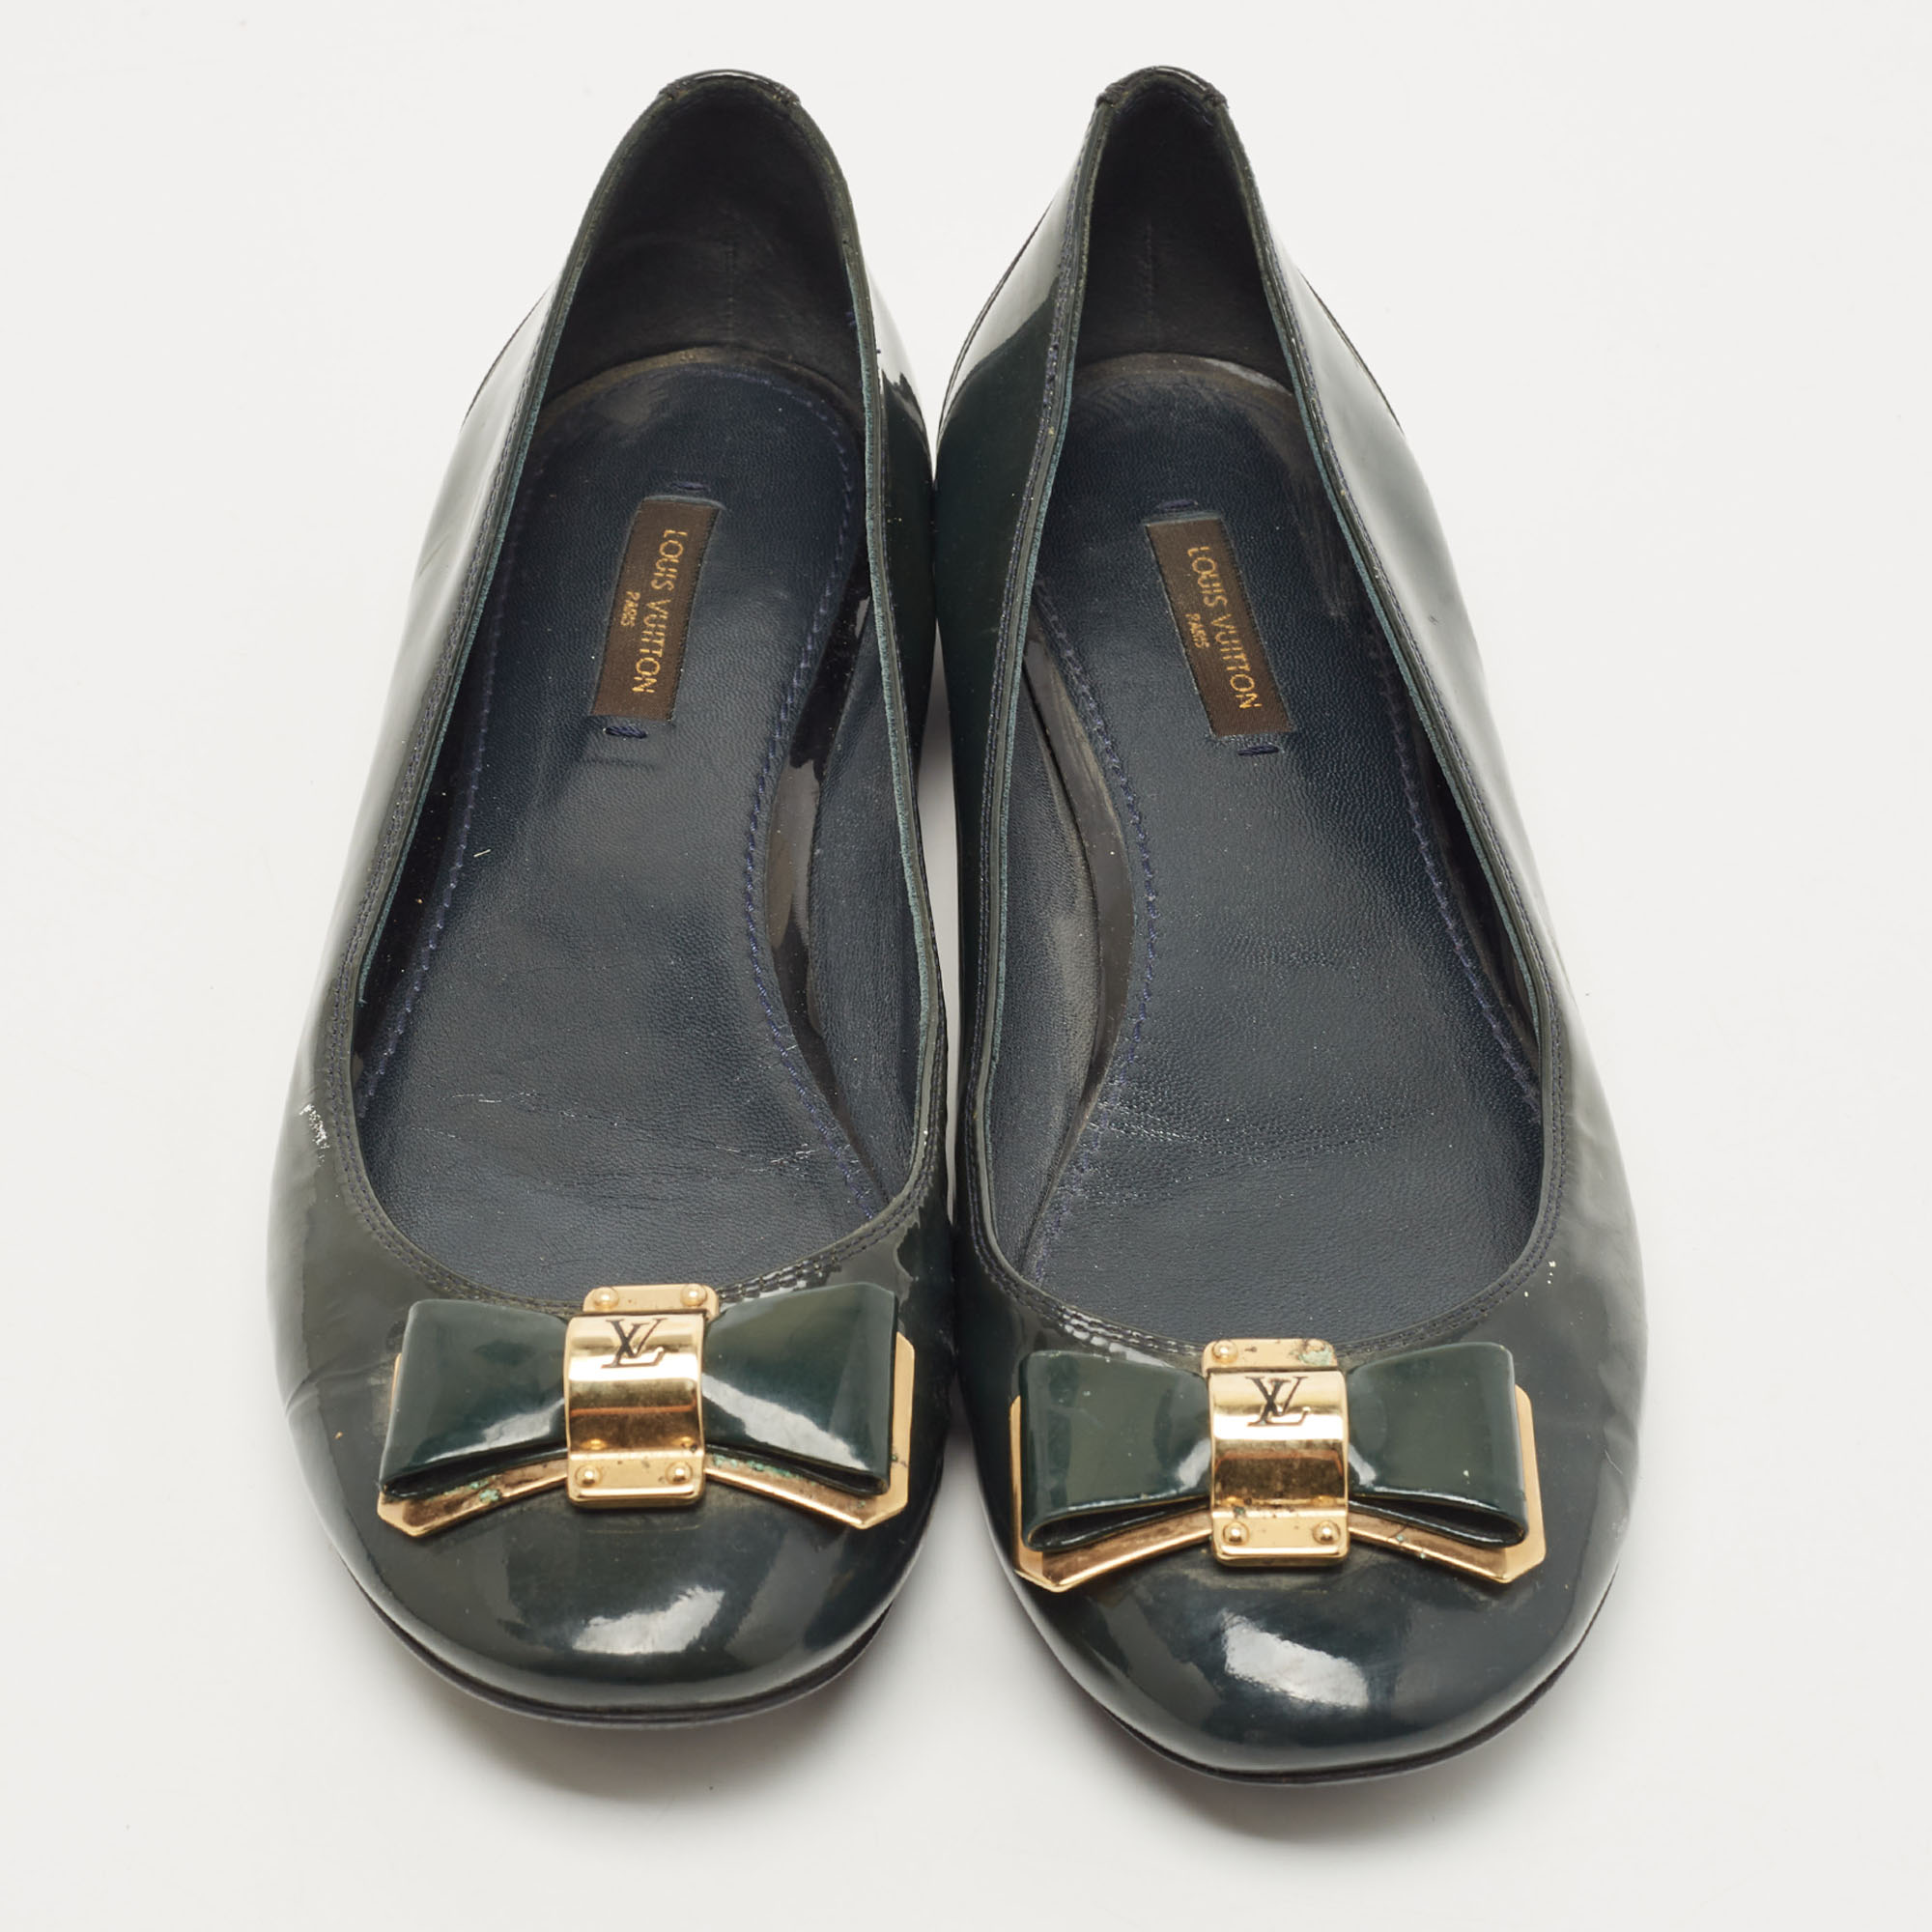 Louis Vuitton Dark Green Patent Leather Ballet Flats Size 38.5